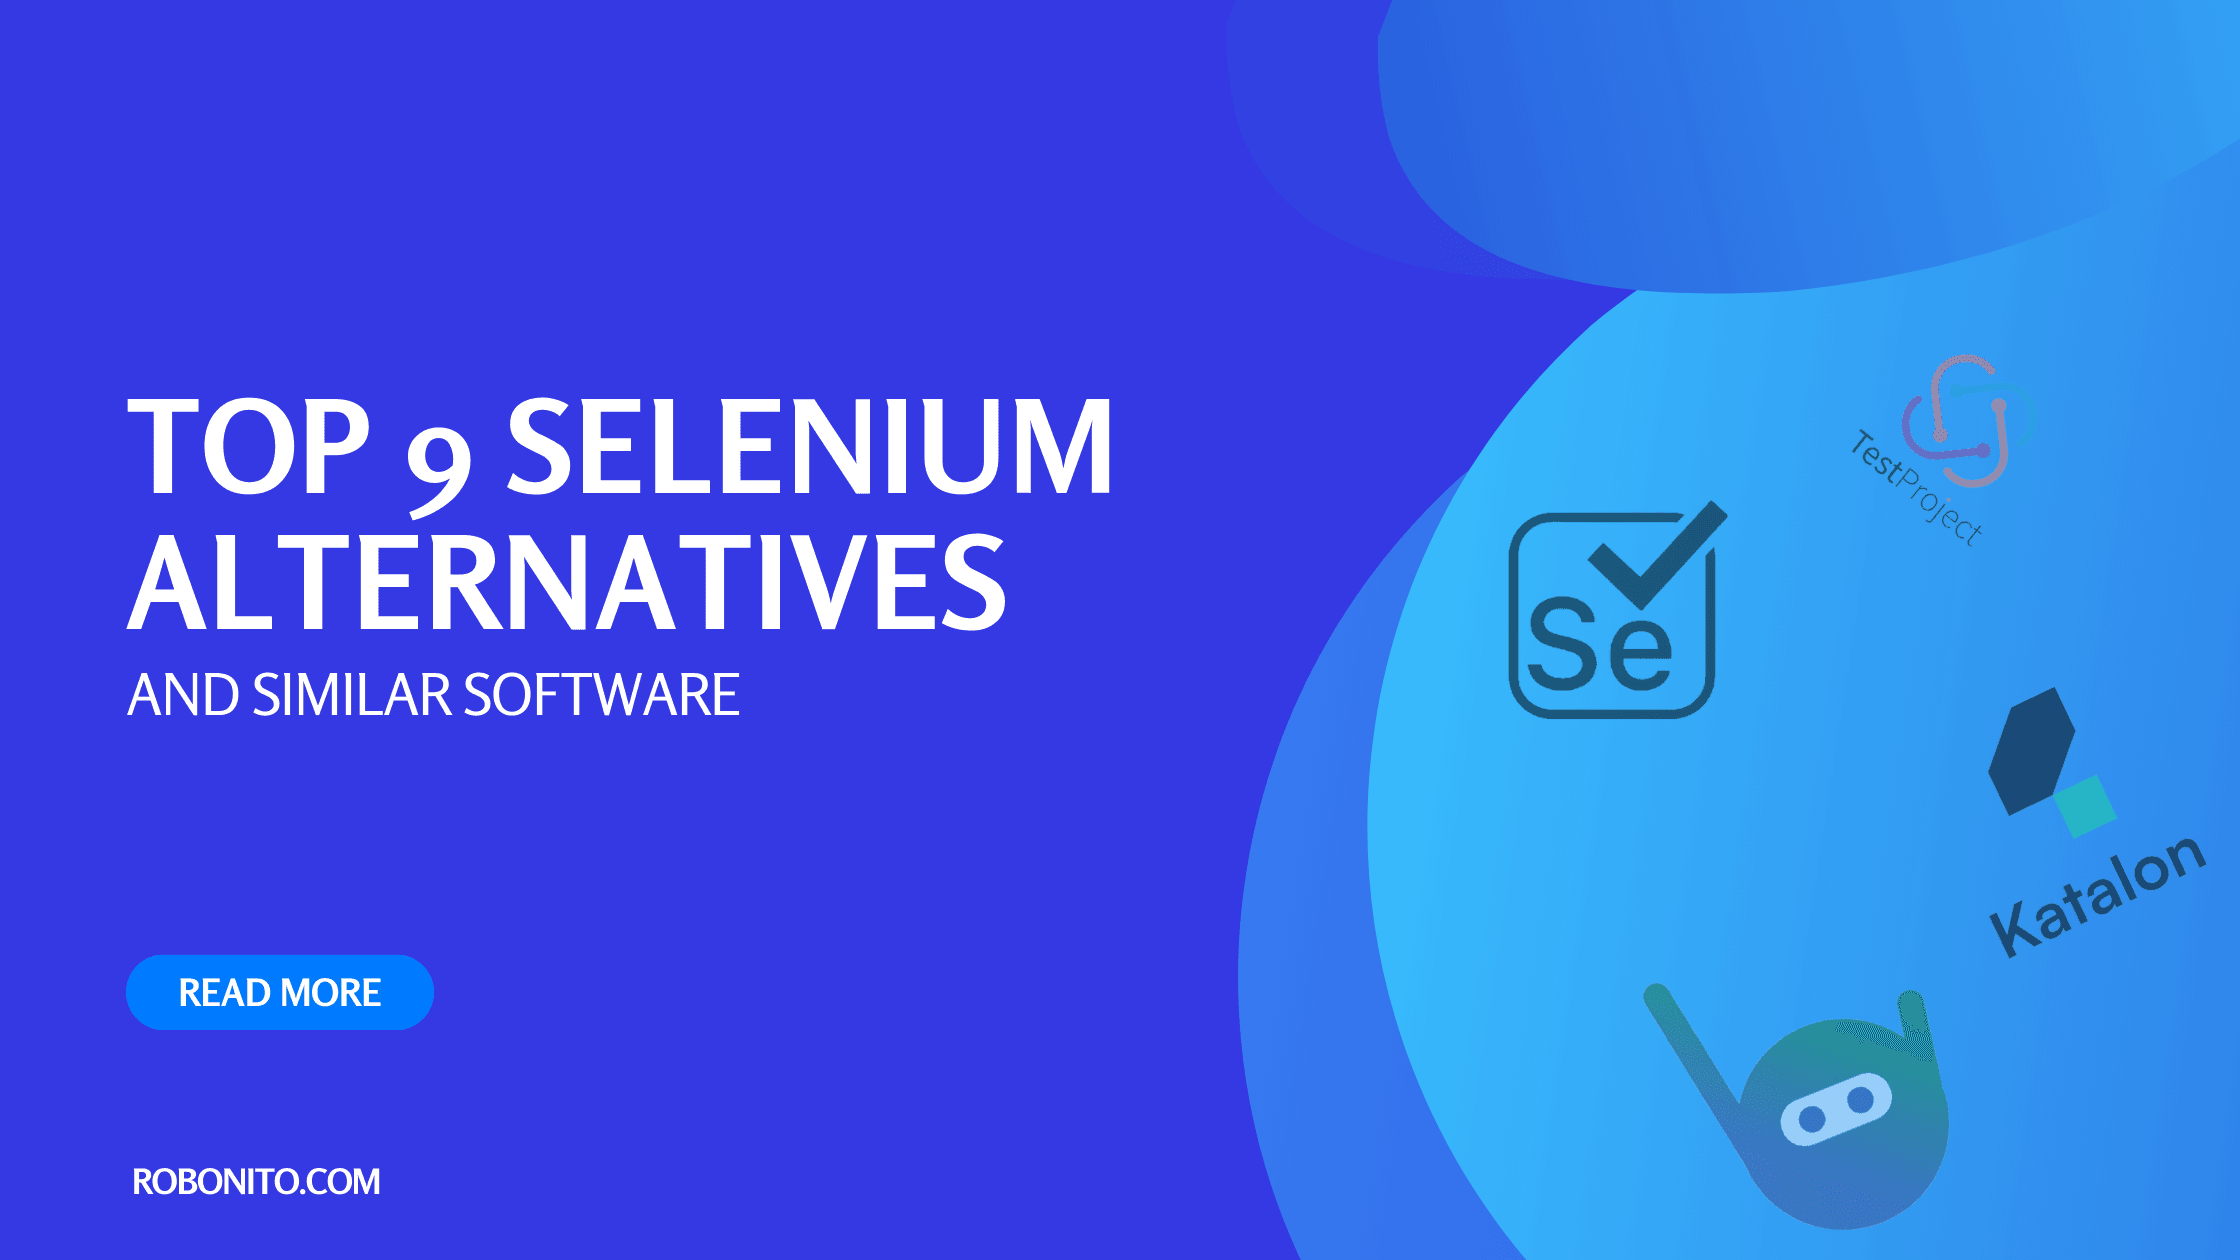 Top 9 Selenium Alternatives